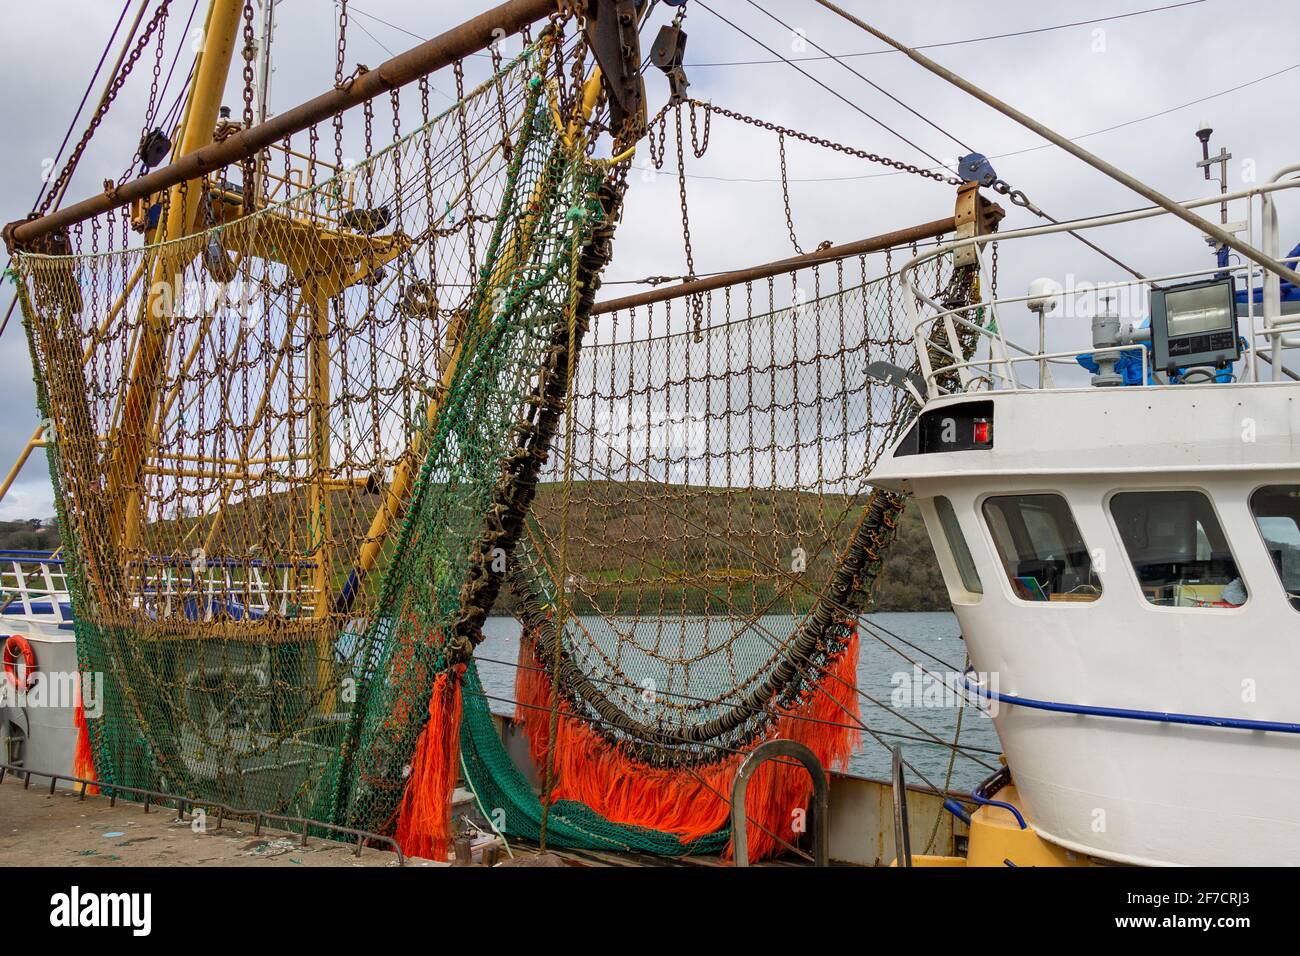 Beam Trawler with trawl gear raised. Stock Photo